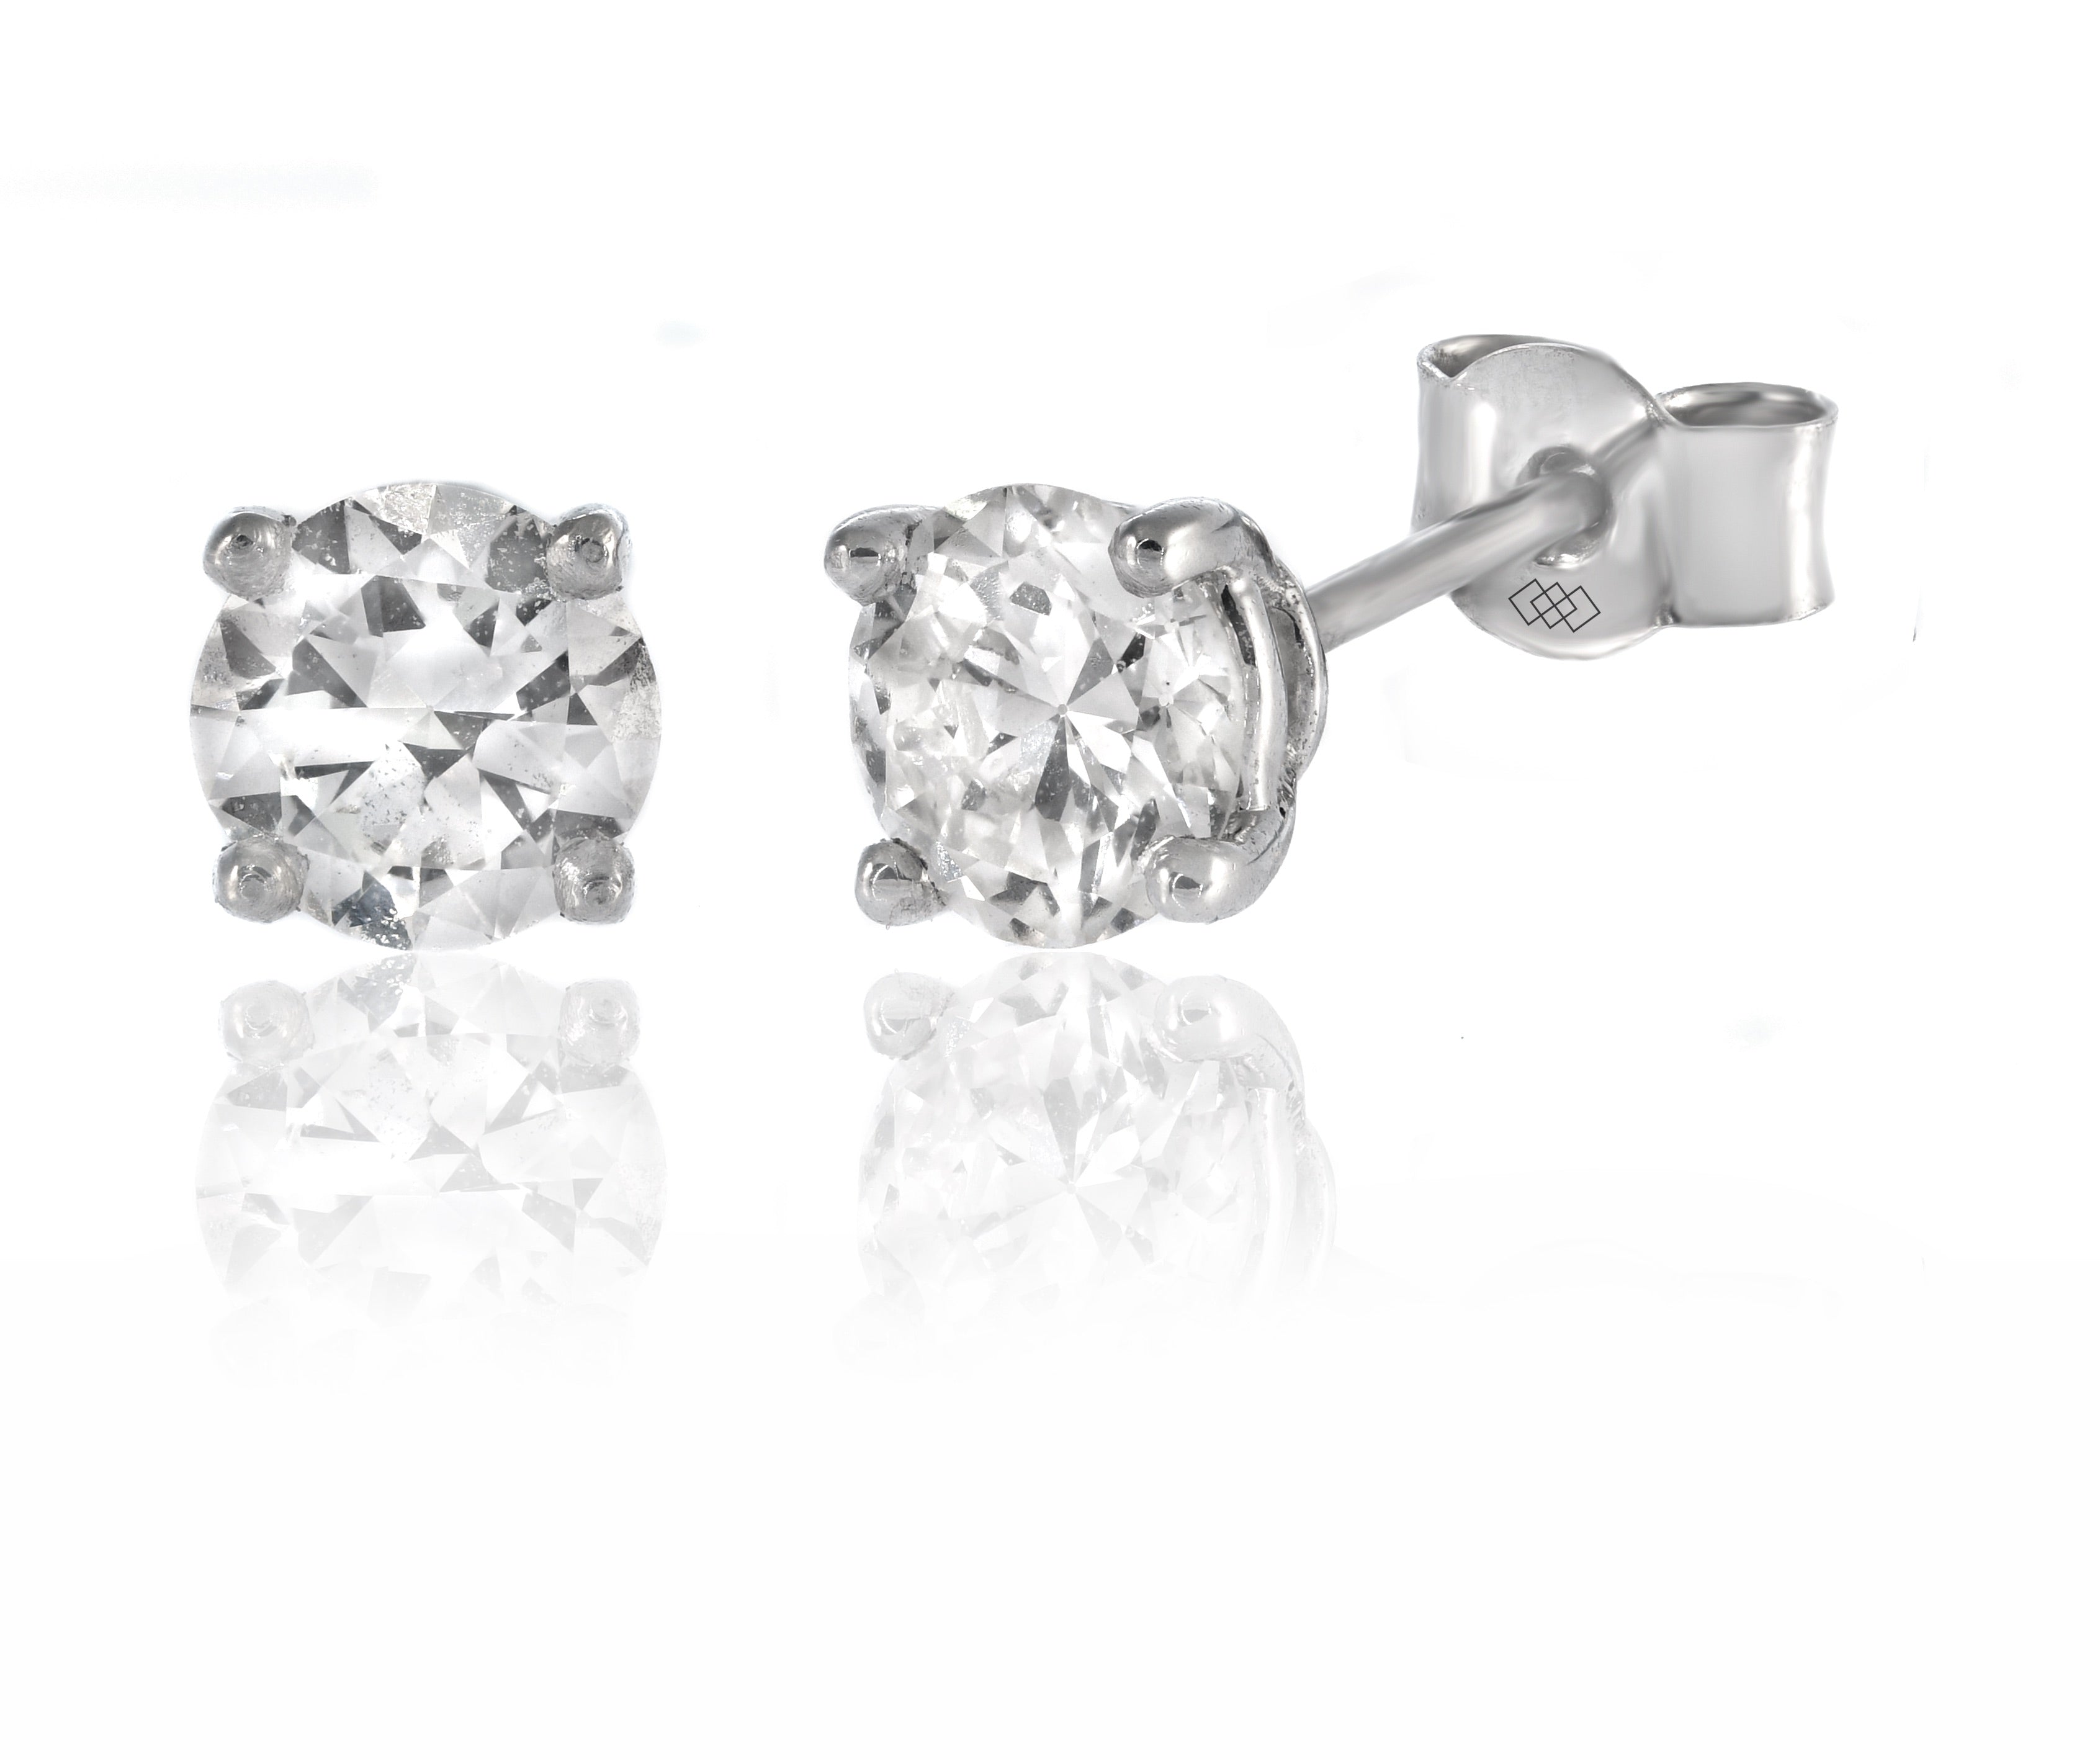 Earrings - Round Brilliant Cut Diamond Stud Earrings